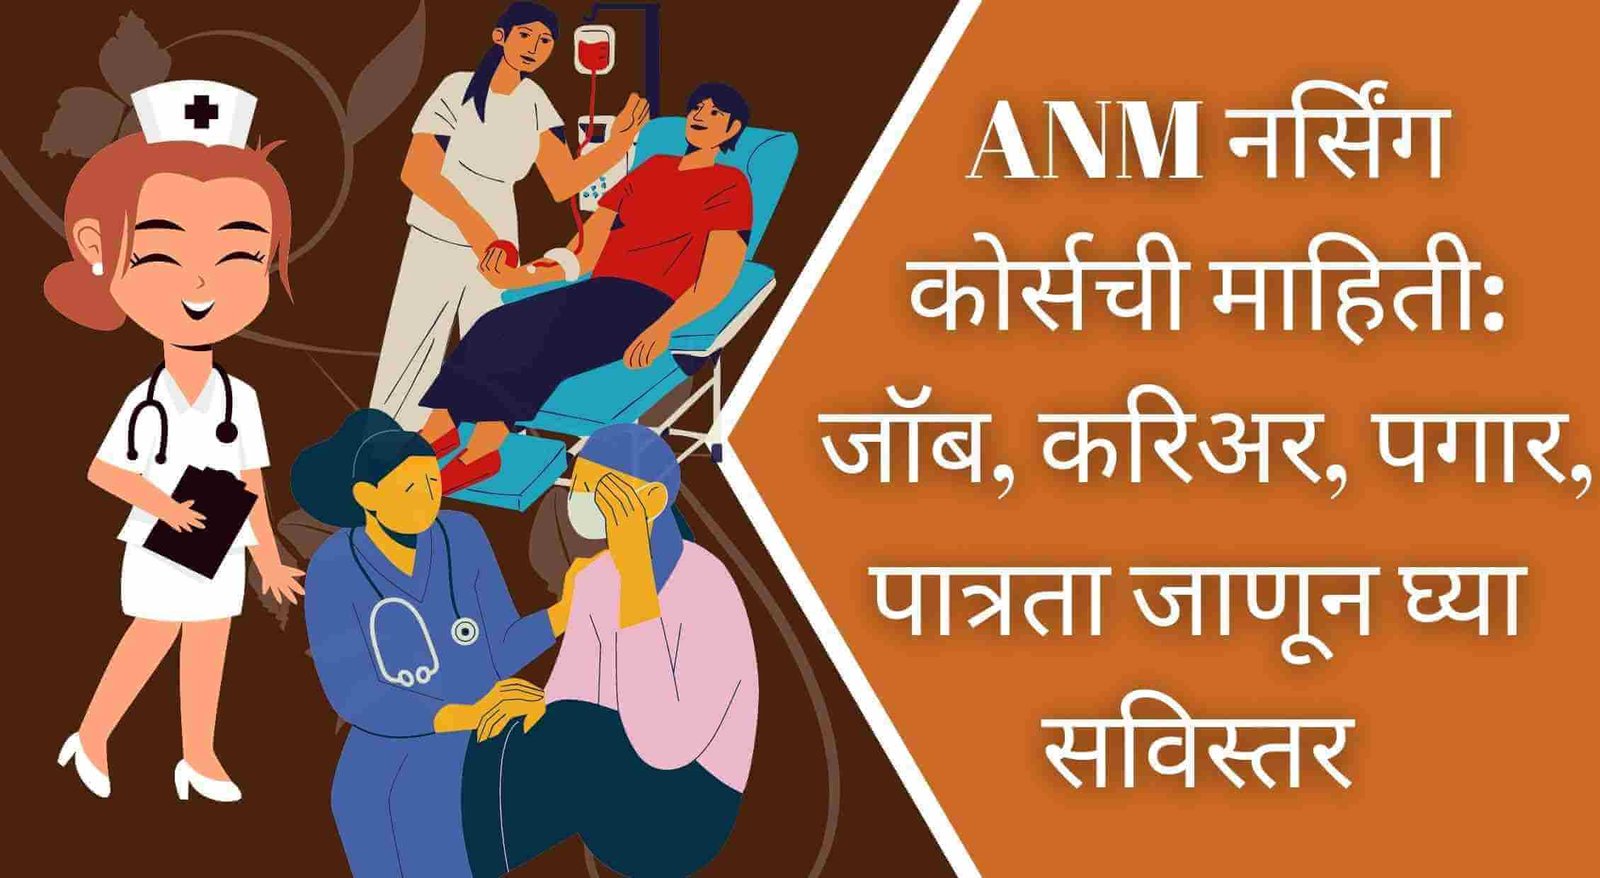 ANM Nursing Course Information In Marathi